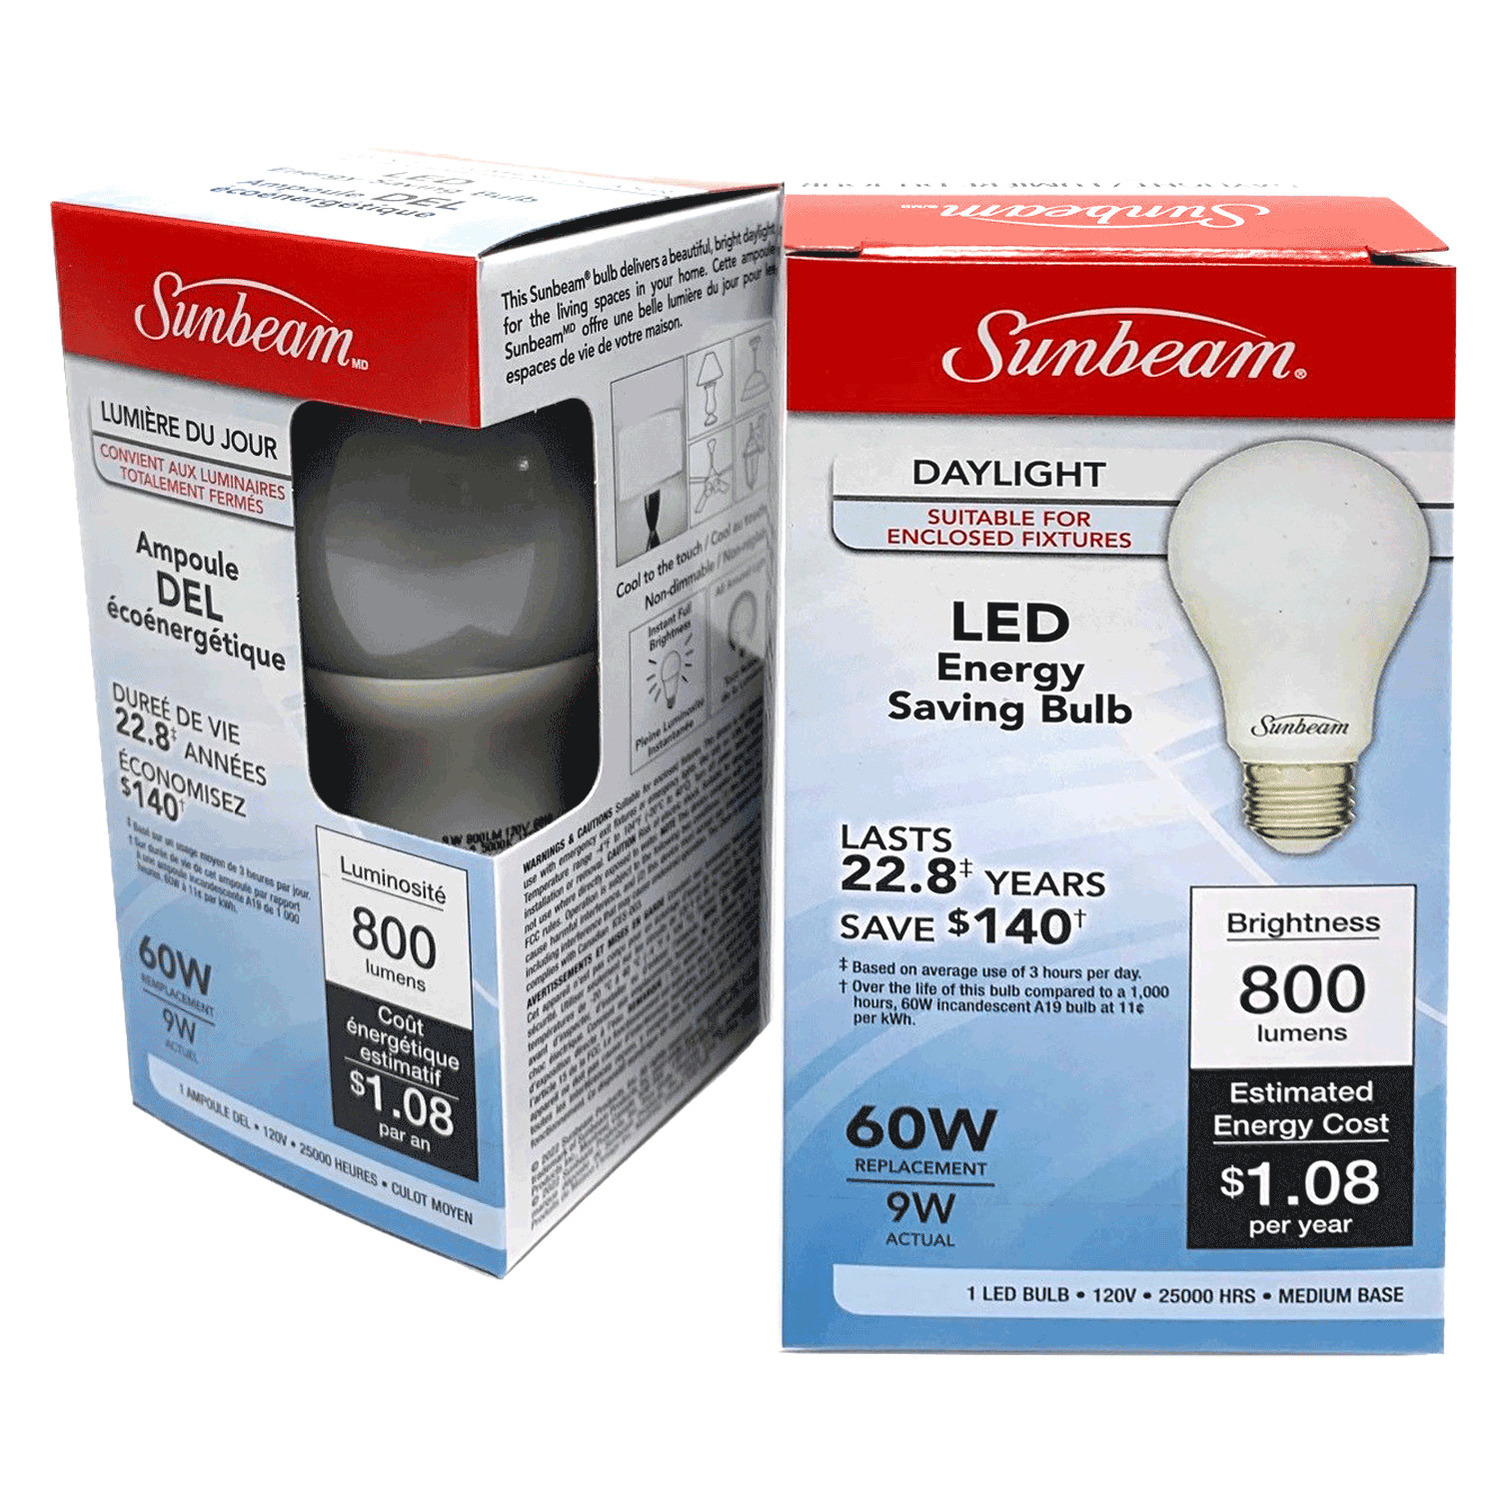 Sunbeam - Energy saving LED light bulb - Daylight, 9W